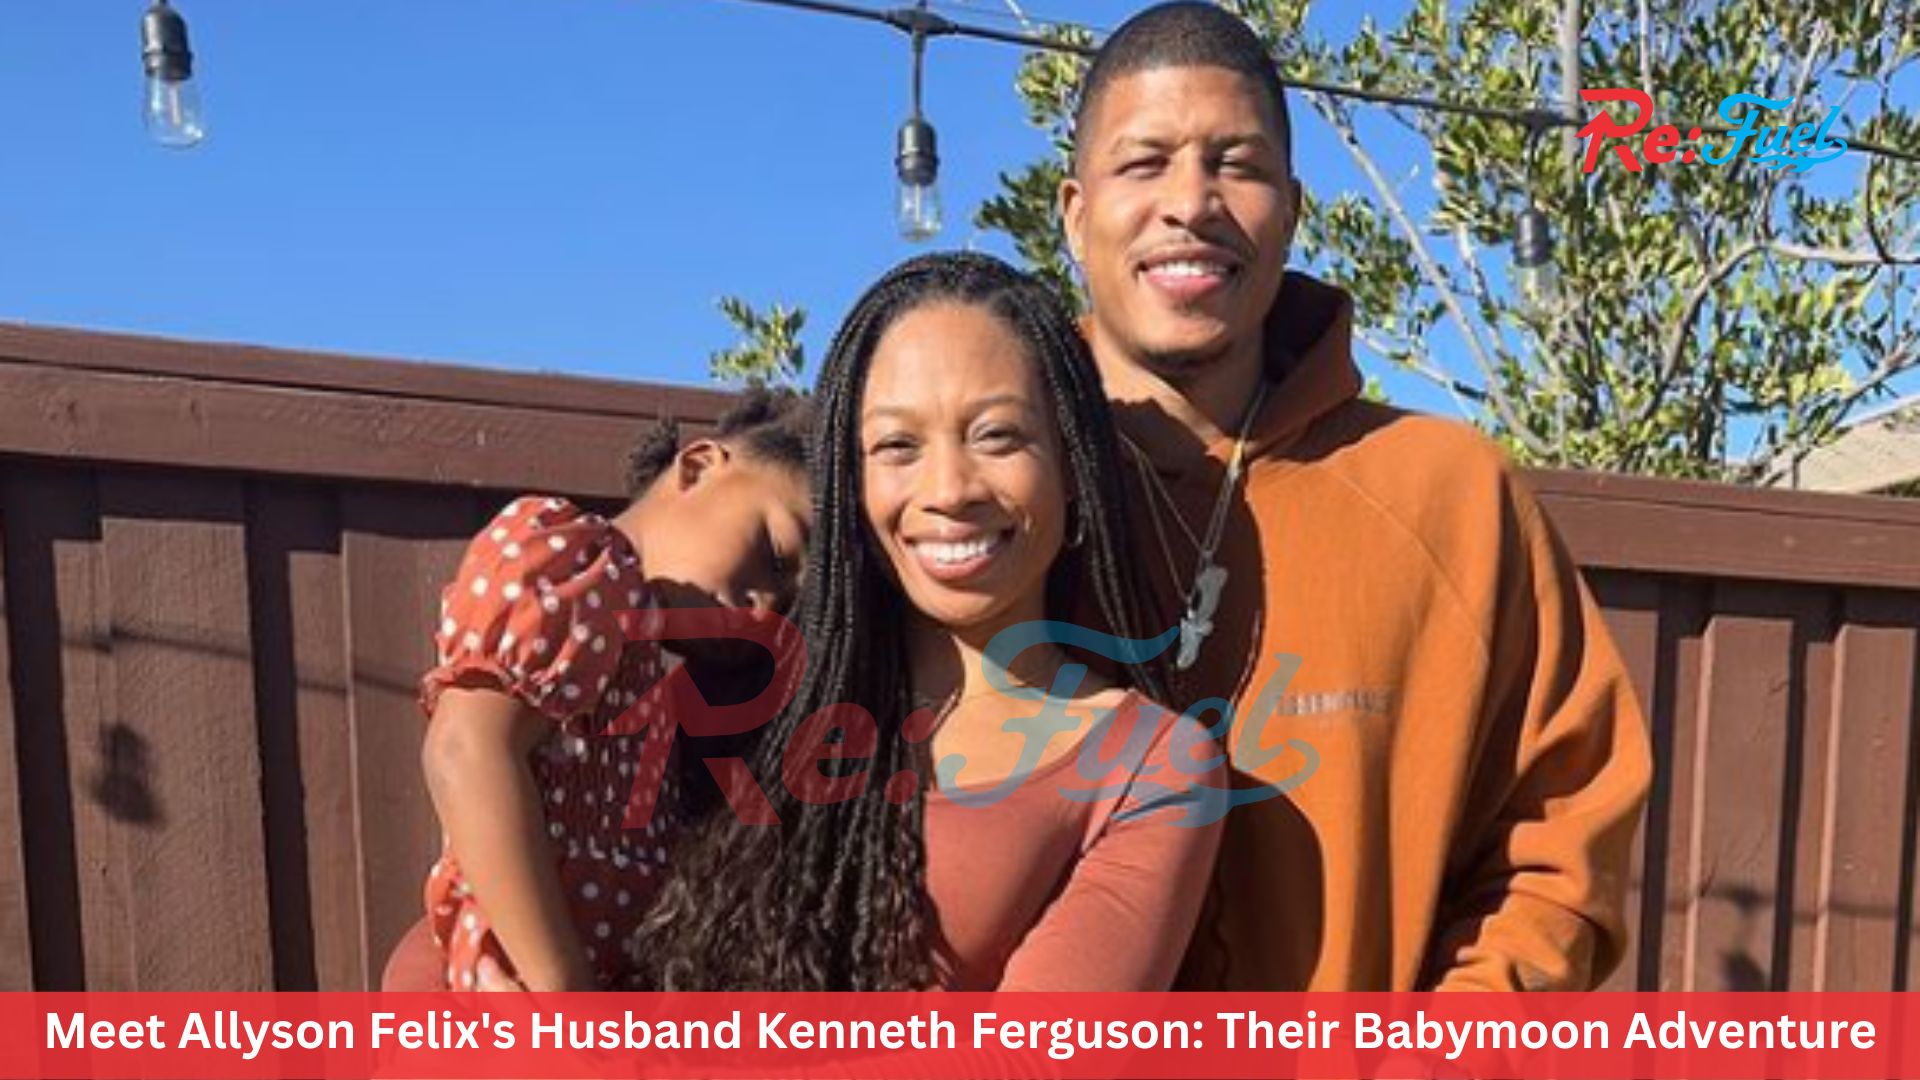 Meet Allyson Felix's Husband Kenneth Ferguson: Their Babymoon Adventure